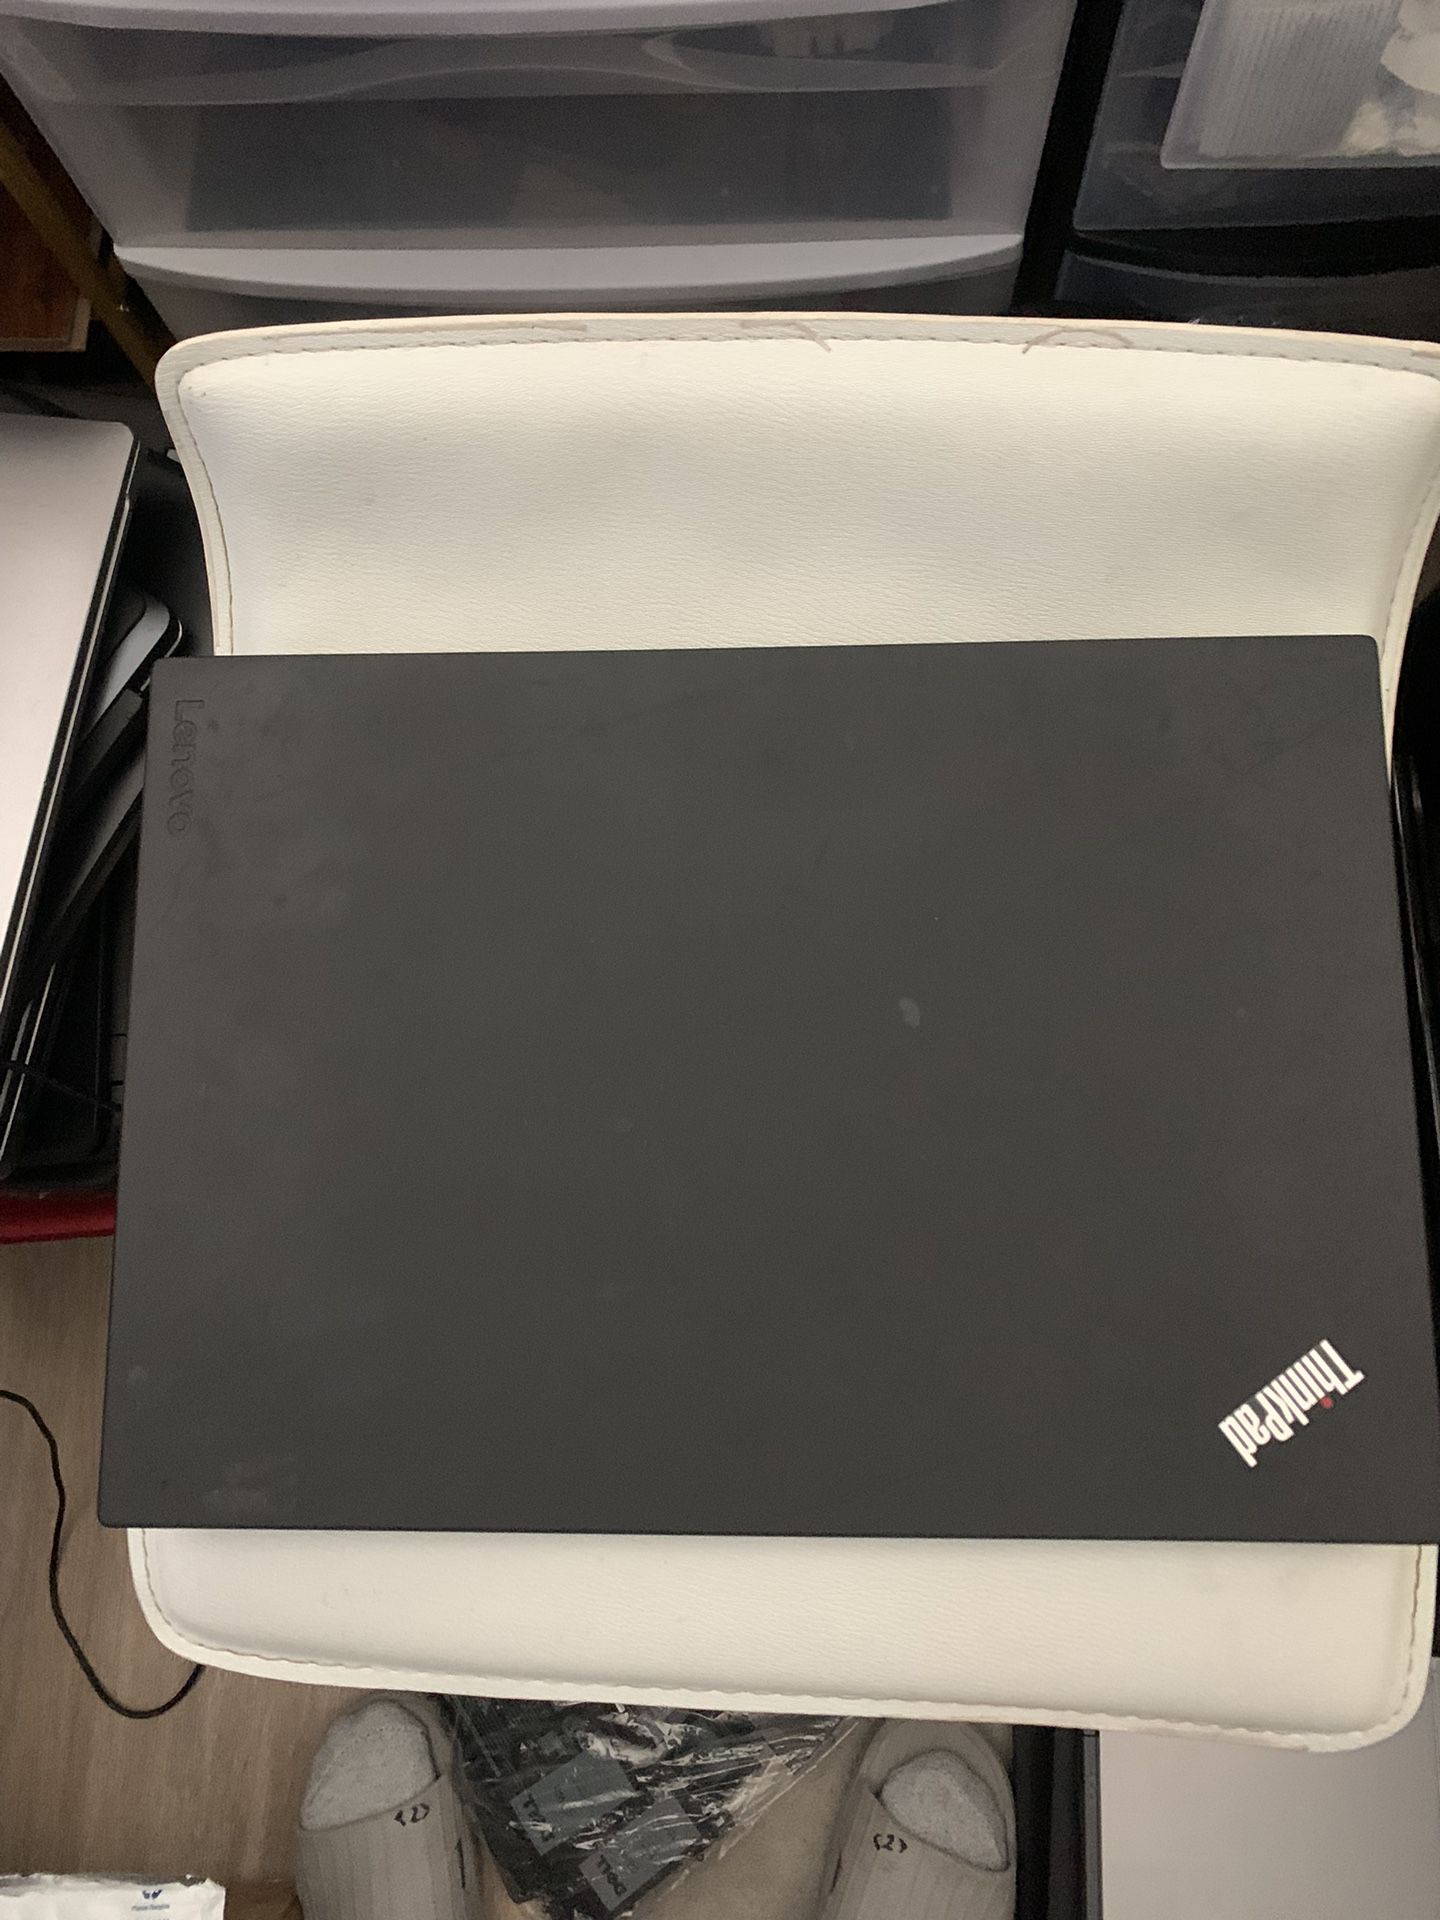 Lenovo ThinkPad T570 15.6” Laptop #24029